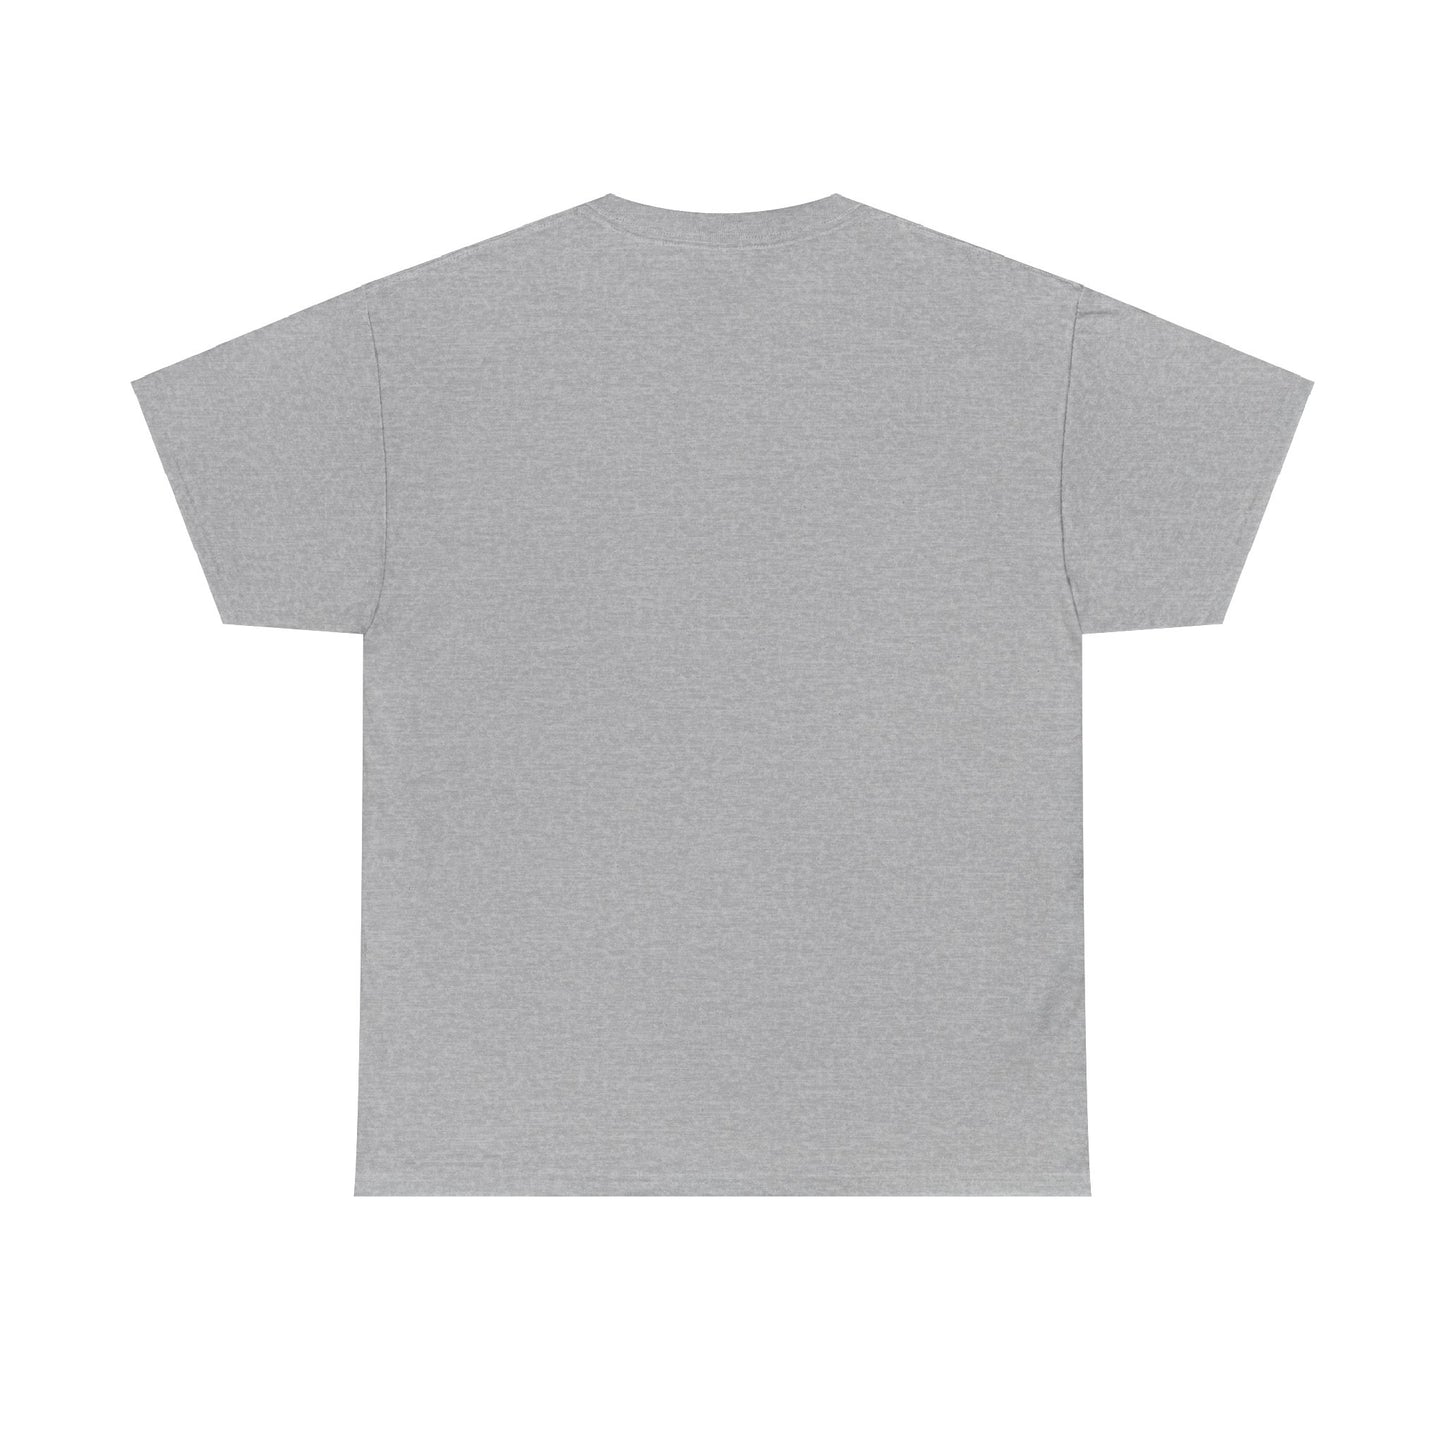 Unisex design (BEAST MODE ON) T-Shirt